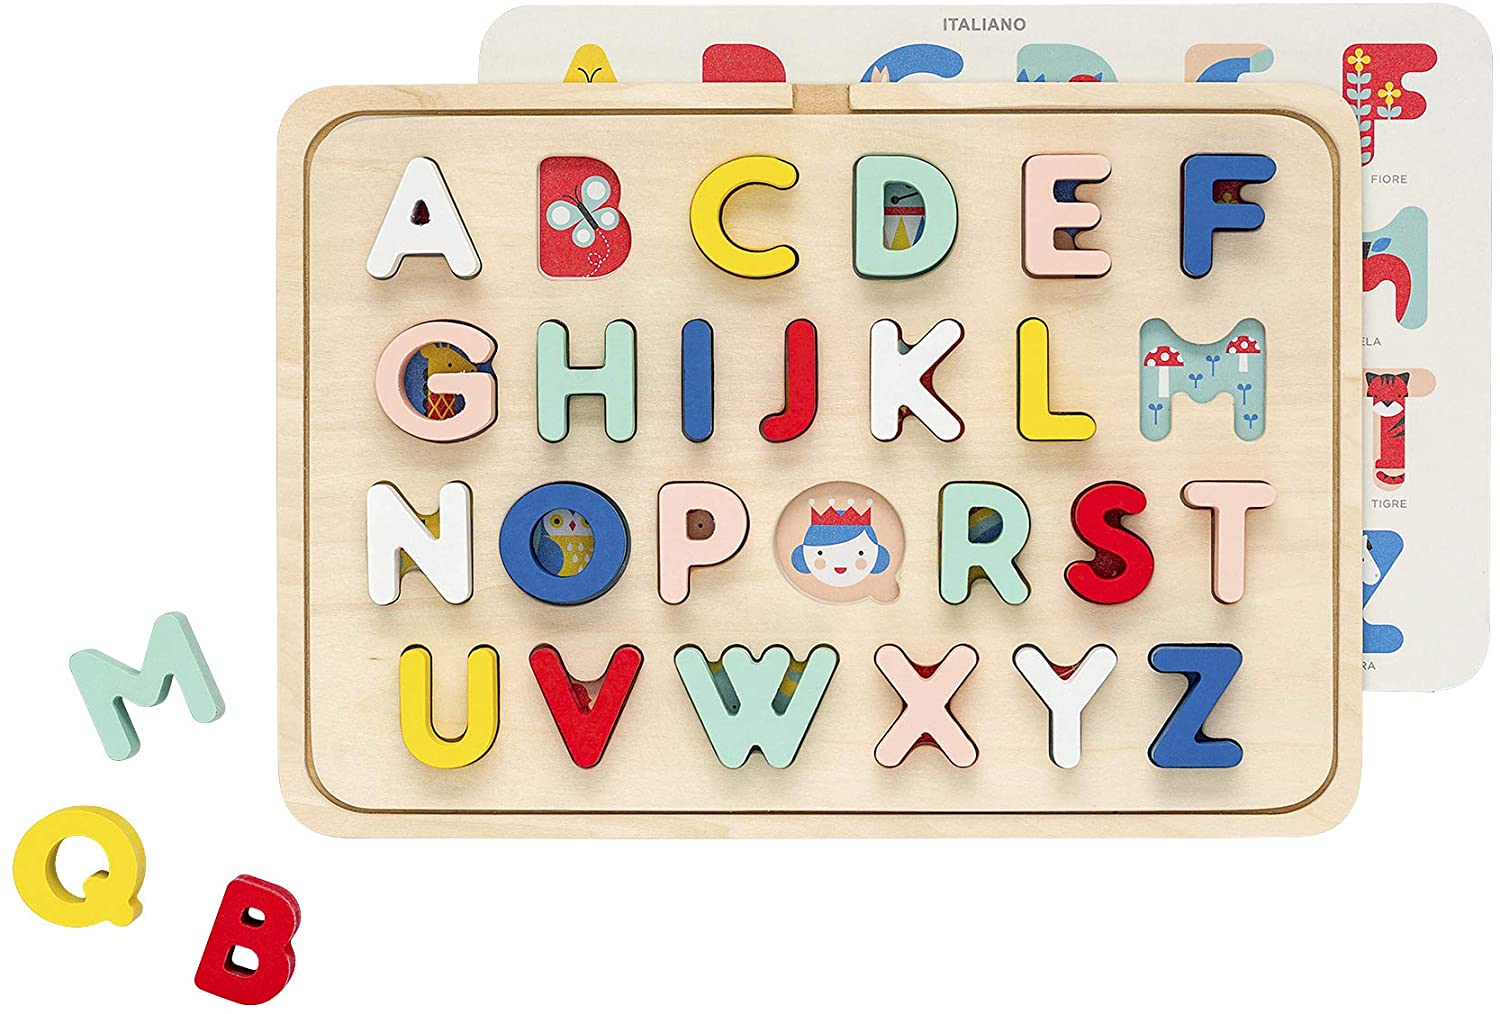 Multi Language Alphabet Wooden Tray Puzzle